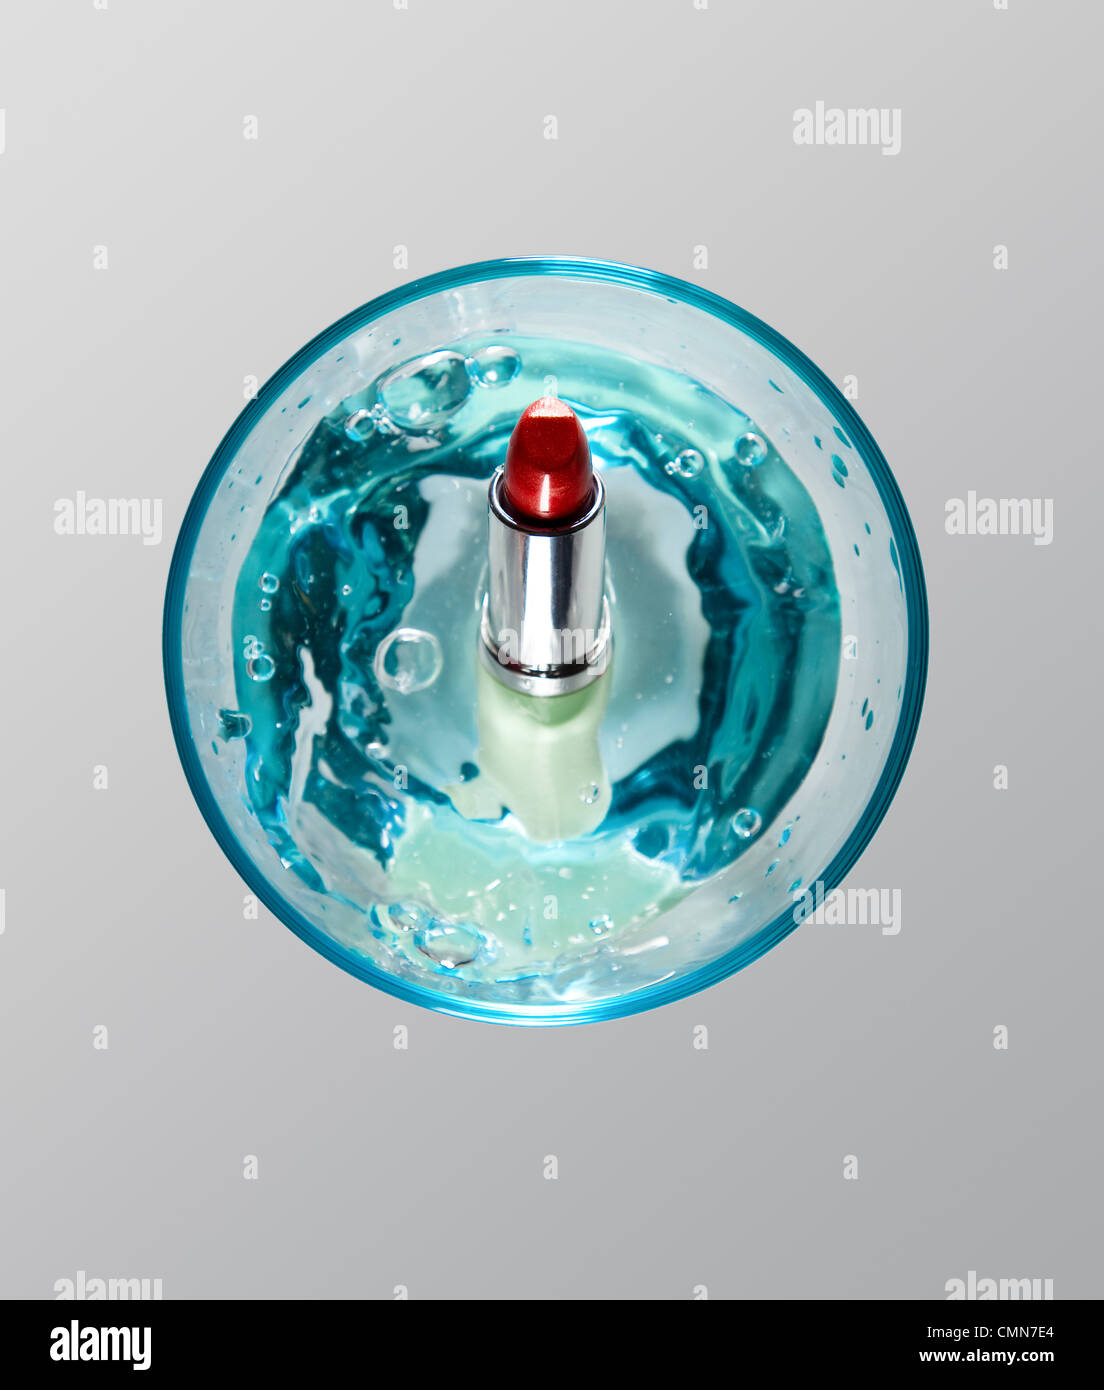 Red Lipstick in Blue Glassware with Splash Stock Photo